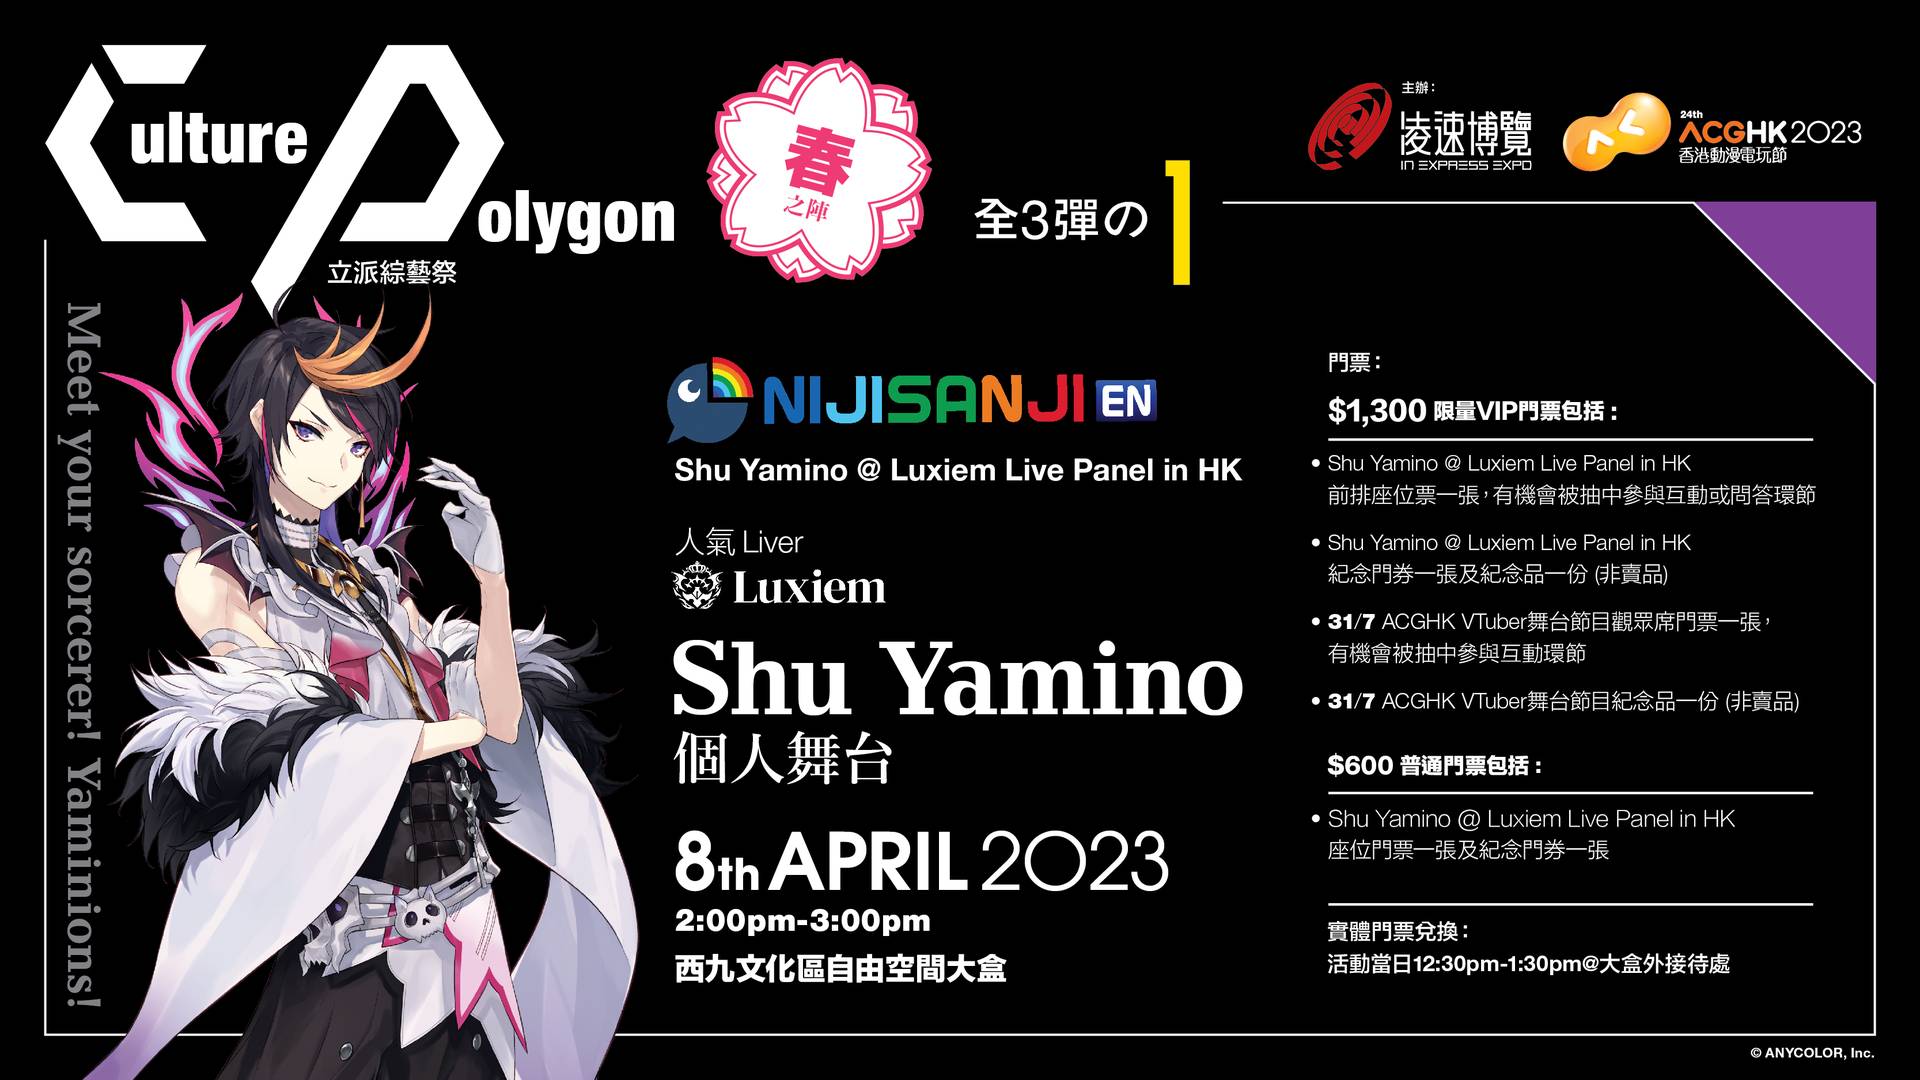 「Culture Polygon 立派綜藝祭」 春之陣 （全3彈の1）『NIJISANJI EN Shu Yamino @ Luxiem Live Panel in HK』 